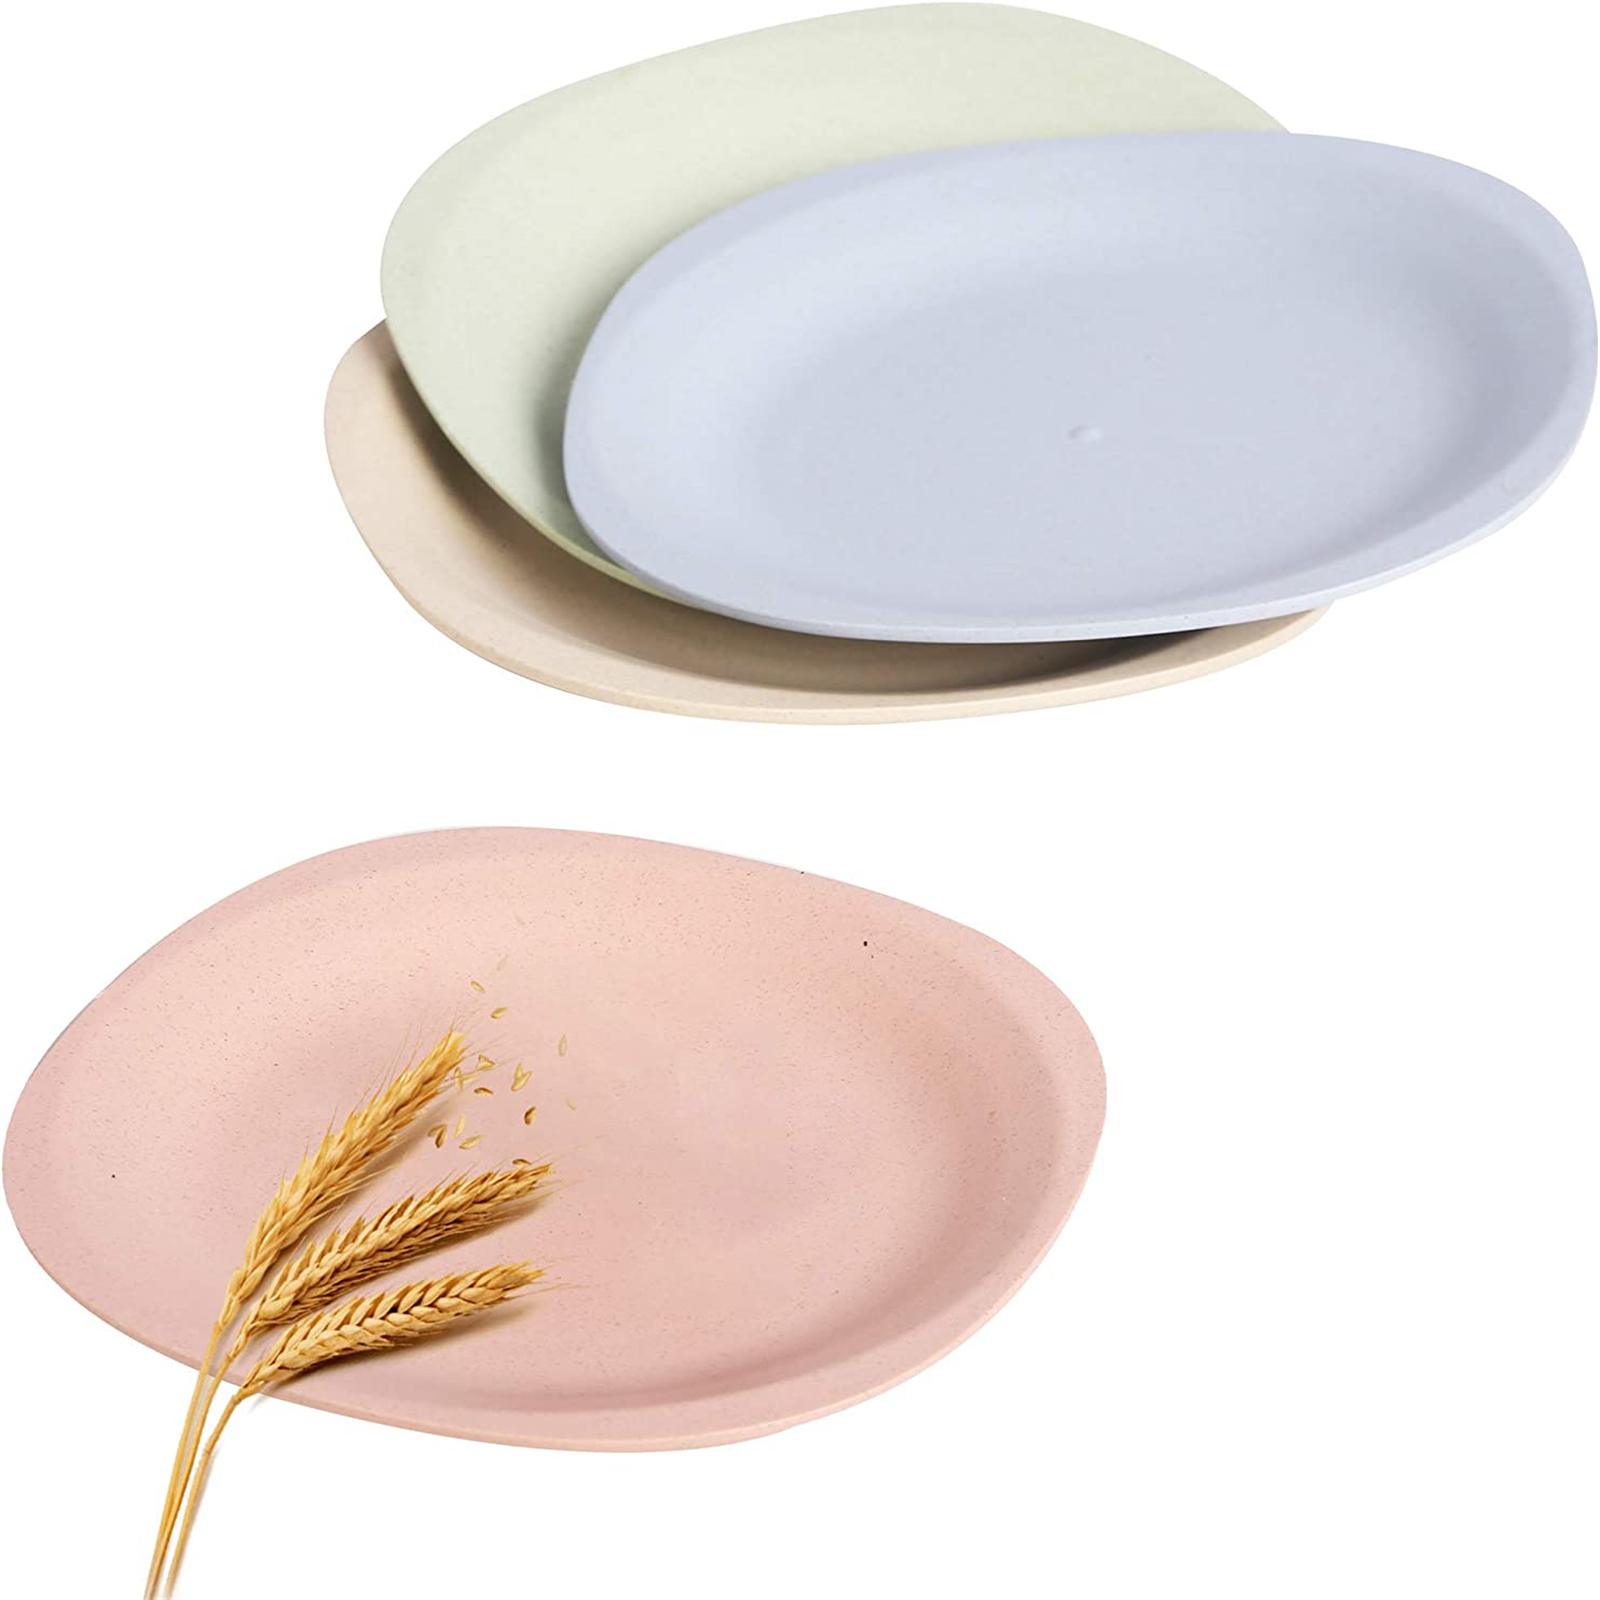 Shopwithgreen Wheat Straw Plastic Plates - 4pcs 7.3 inch Pale Blush-shopwithgreen